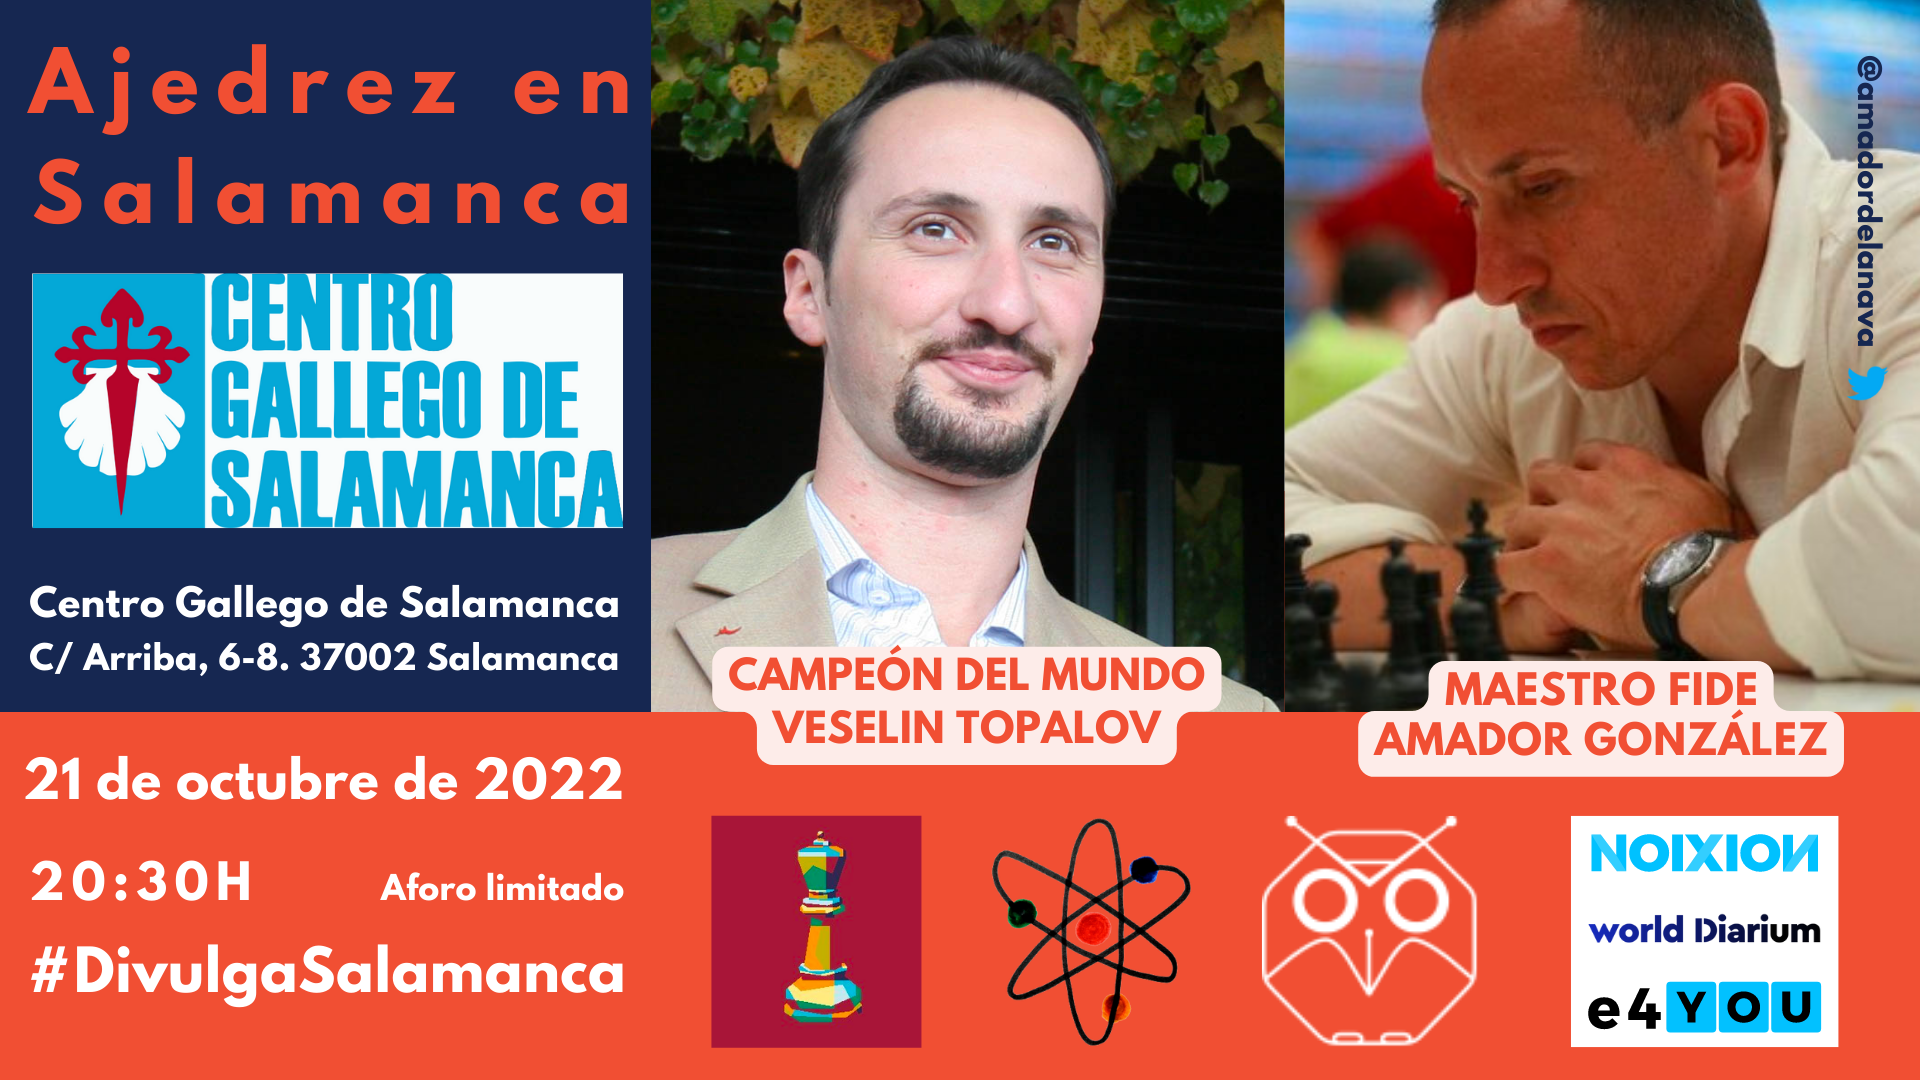 DivulgaSalamanca 2022: Ajedrez en Salamanca